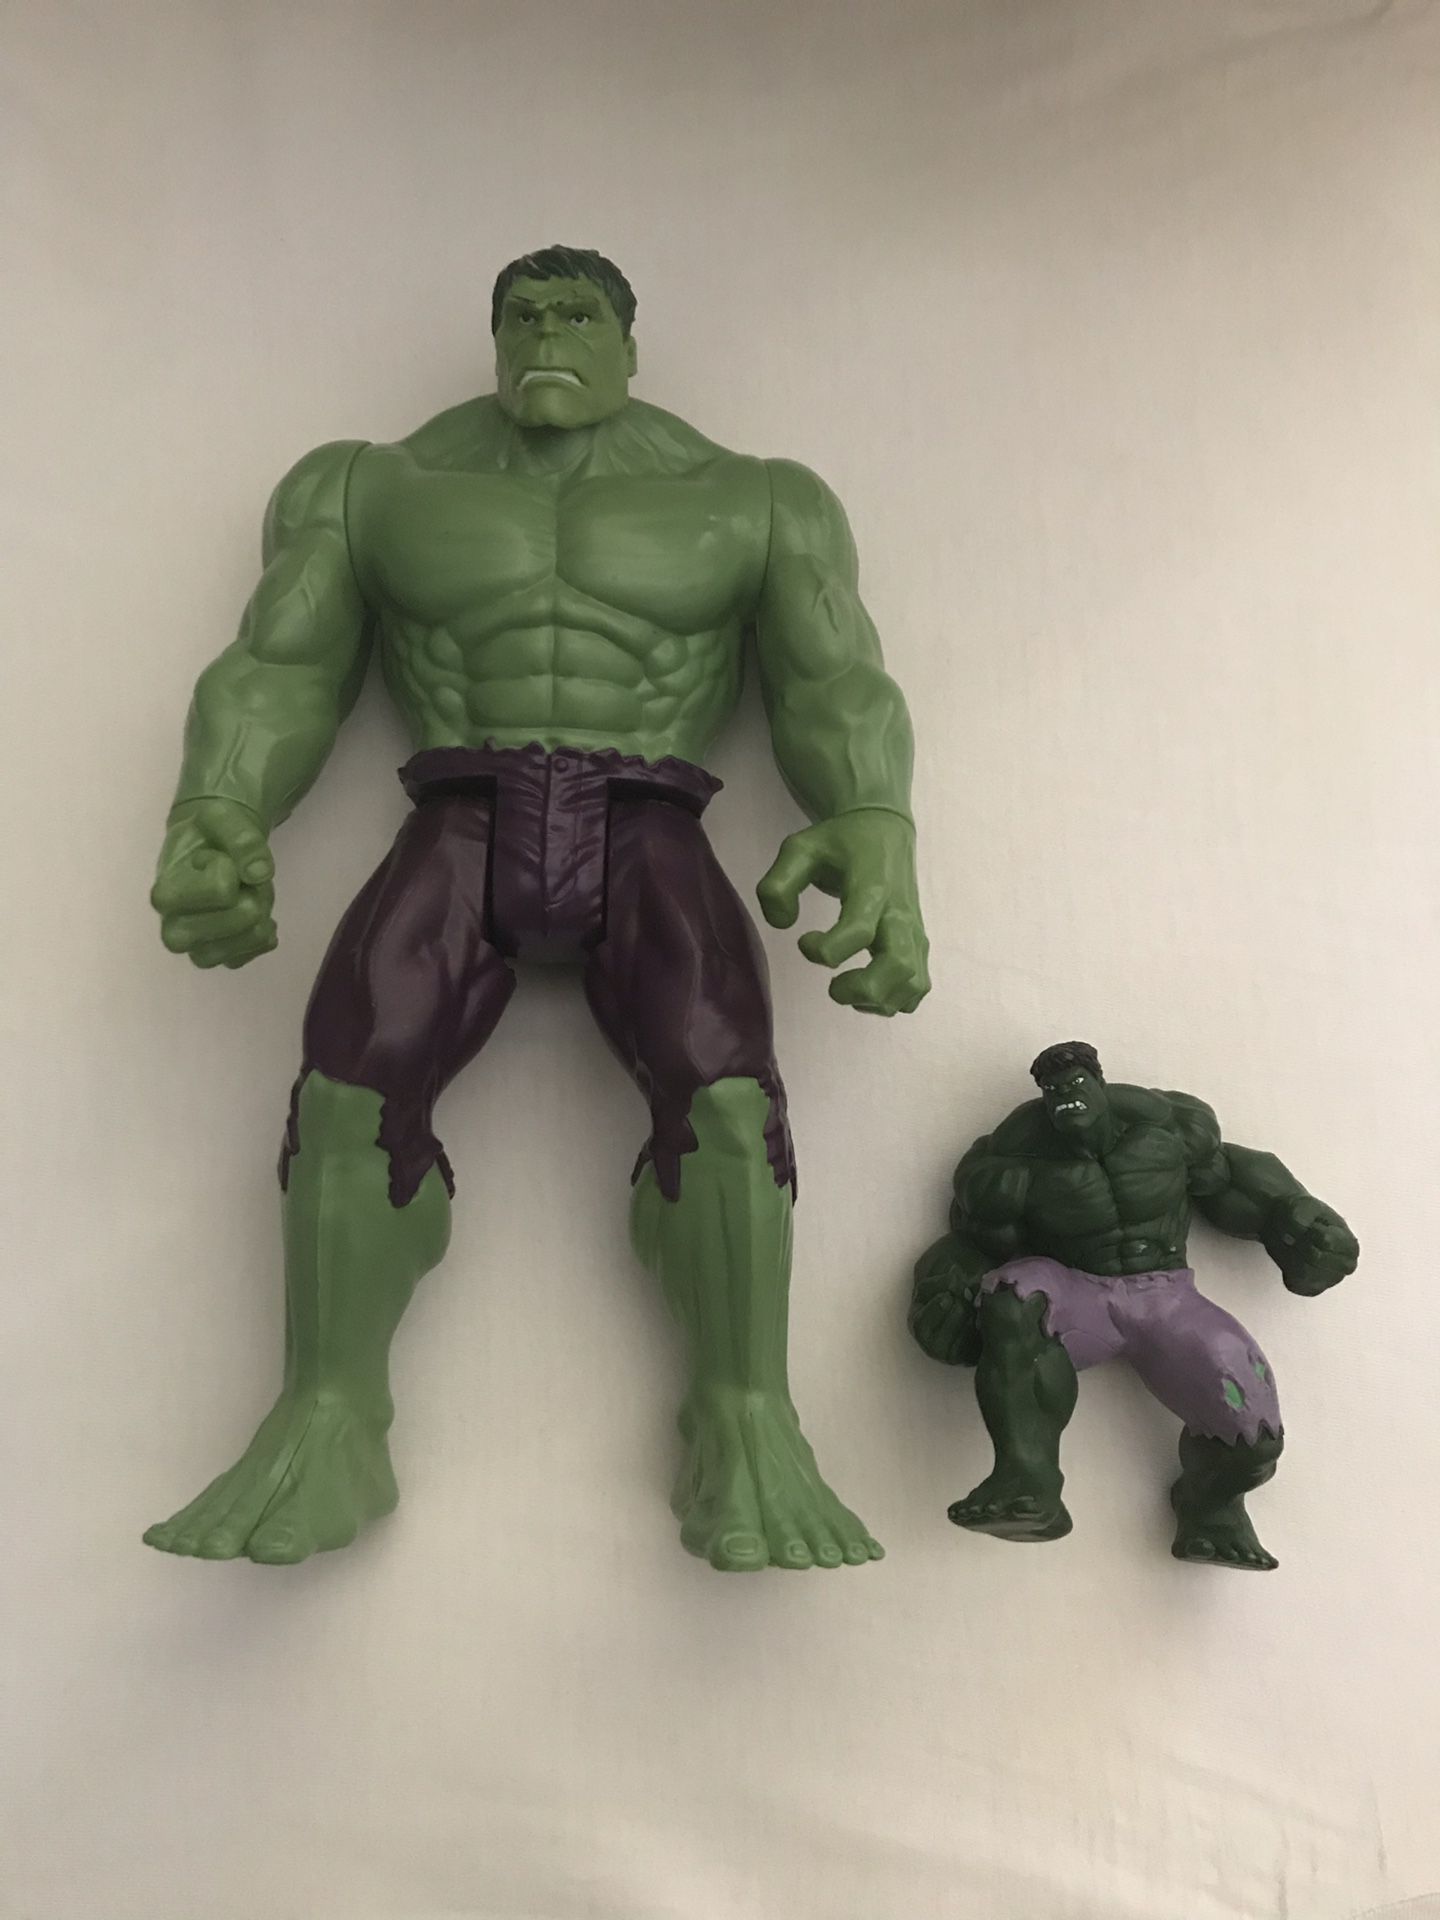 Marvel Comics Figures Big Hulk Around 12 Inches Tall Small Hulk Around 4 Inches Tall Good Condition Both For $15